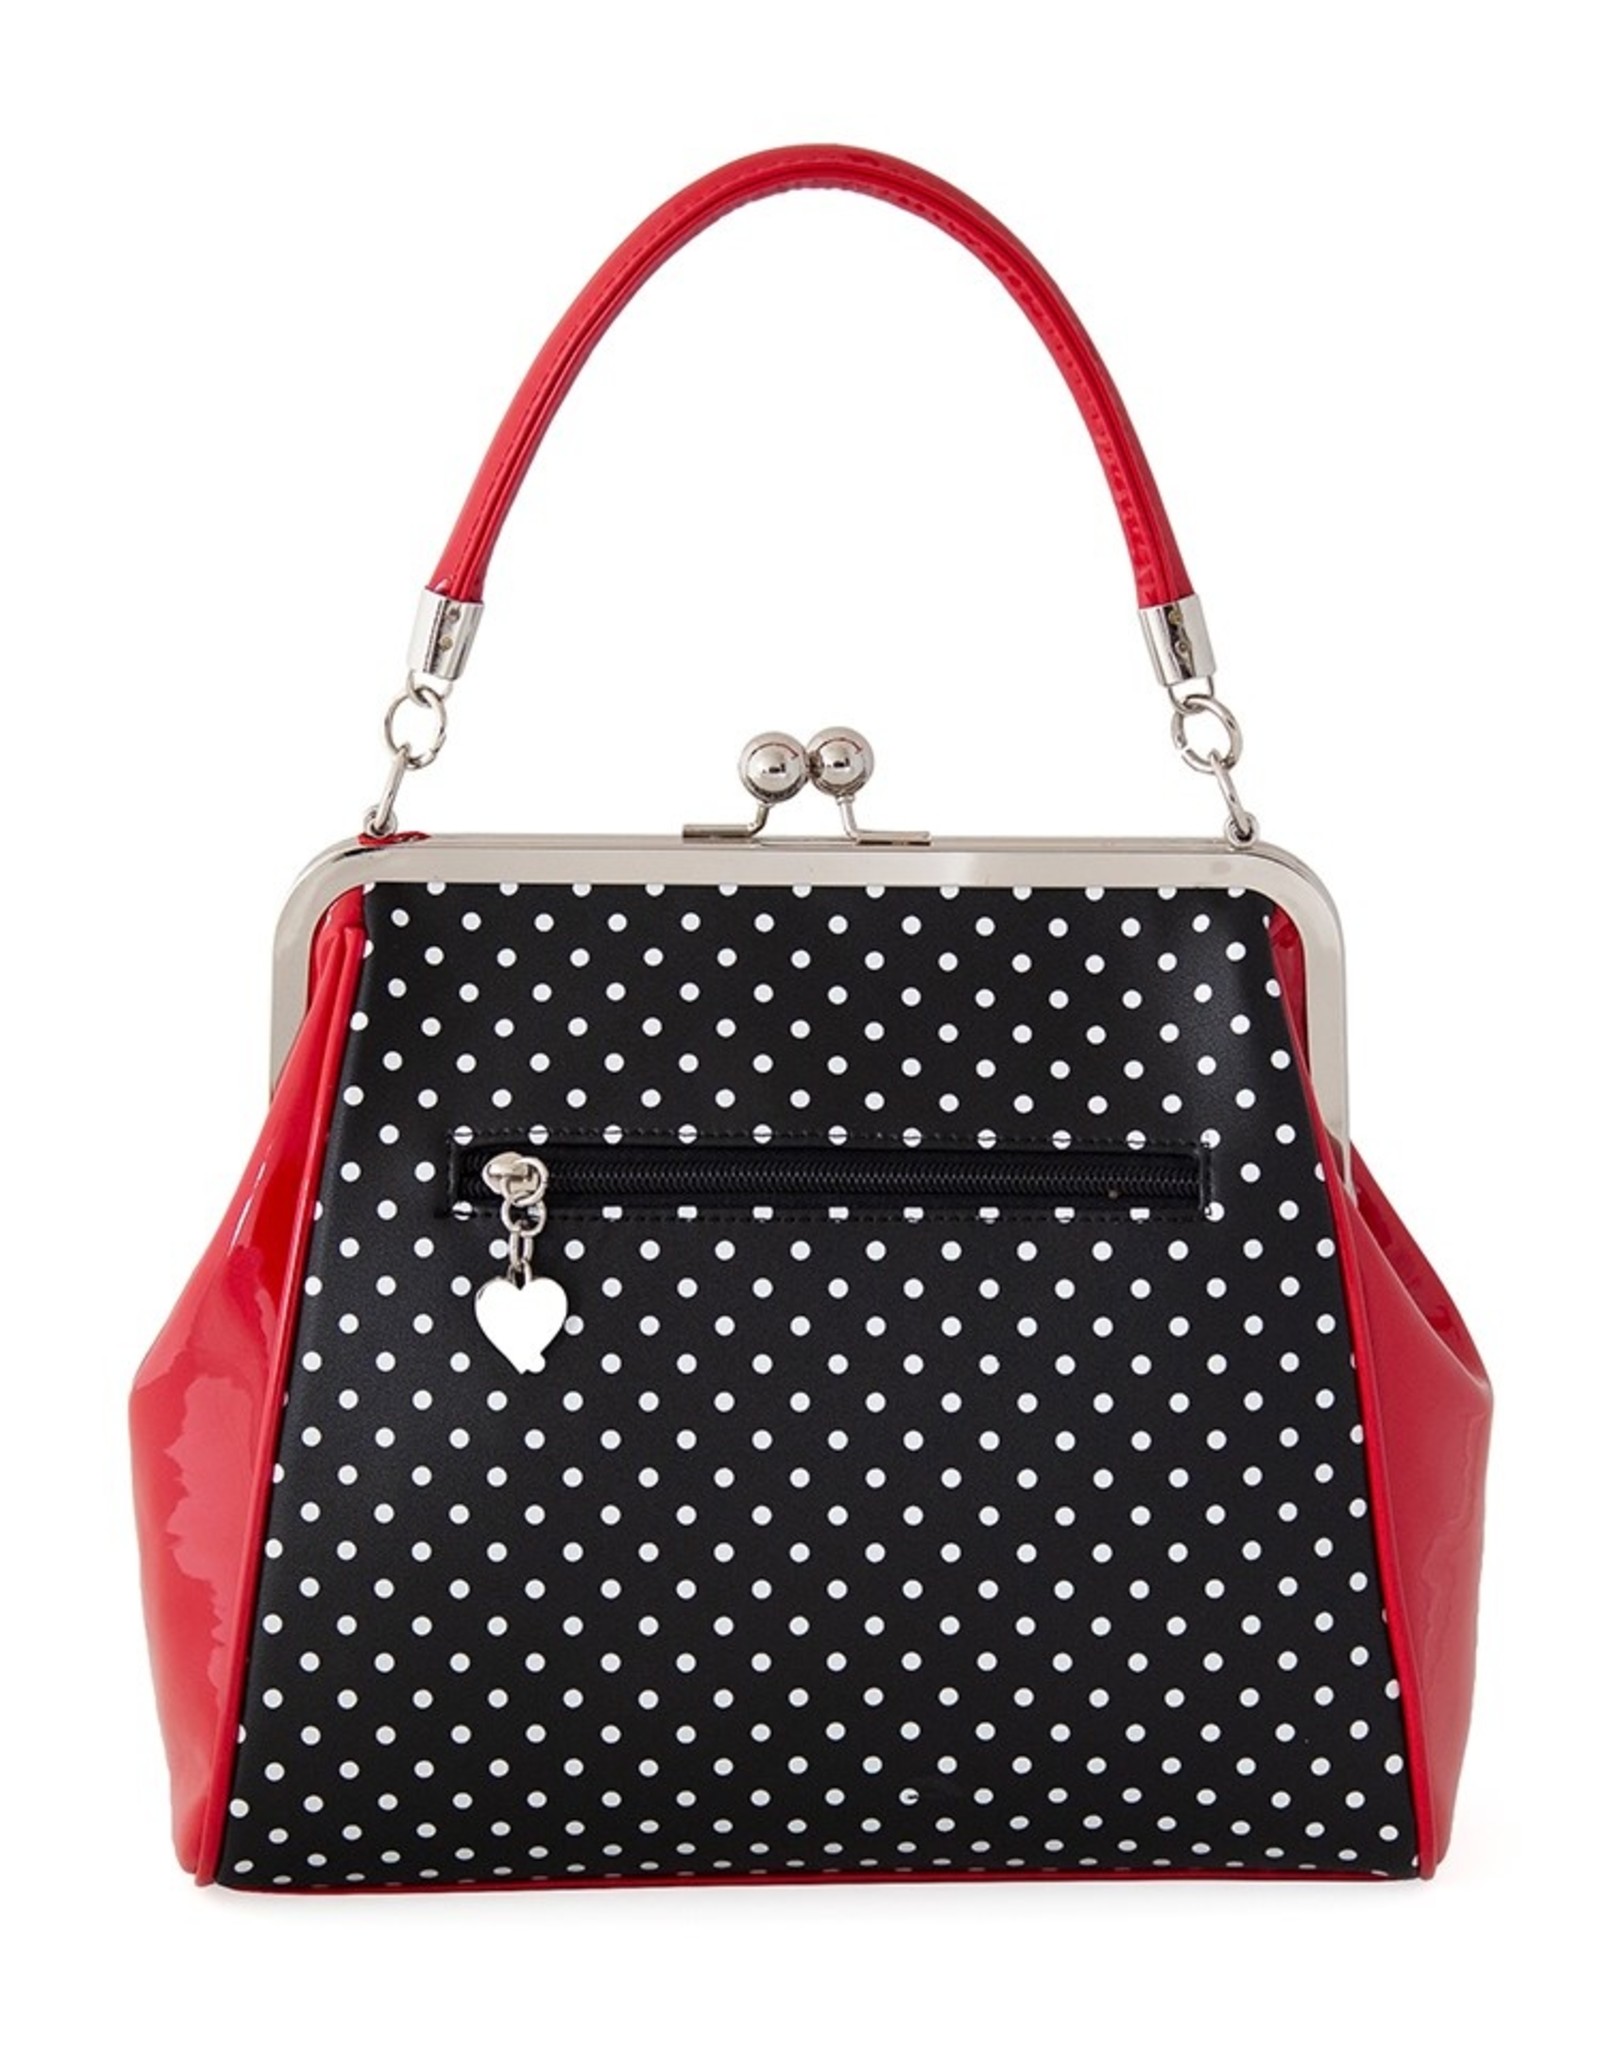 Banned Retro bags and Vintage bags - Banned Polka Star handbag black-red